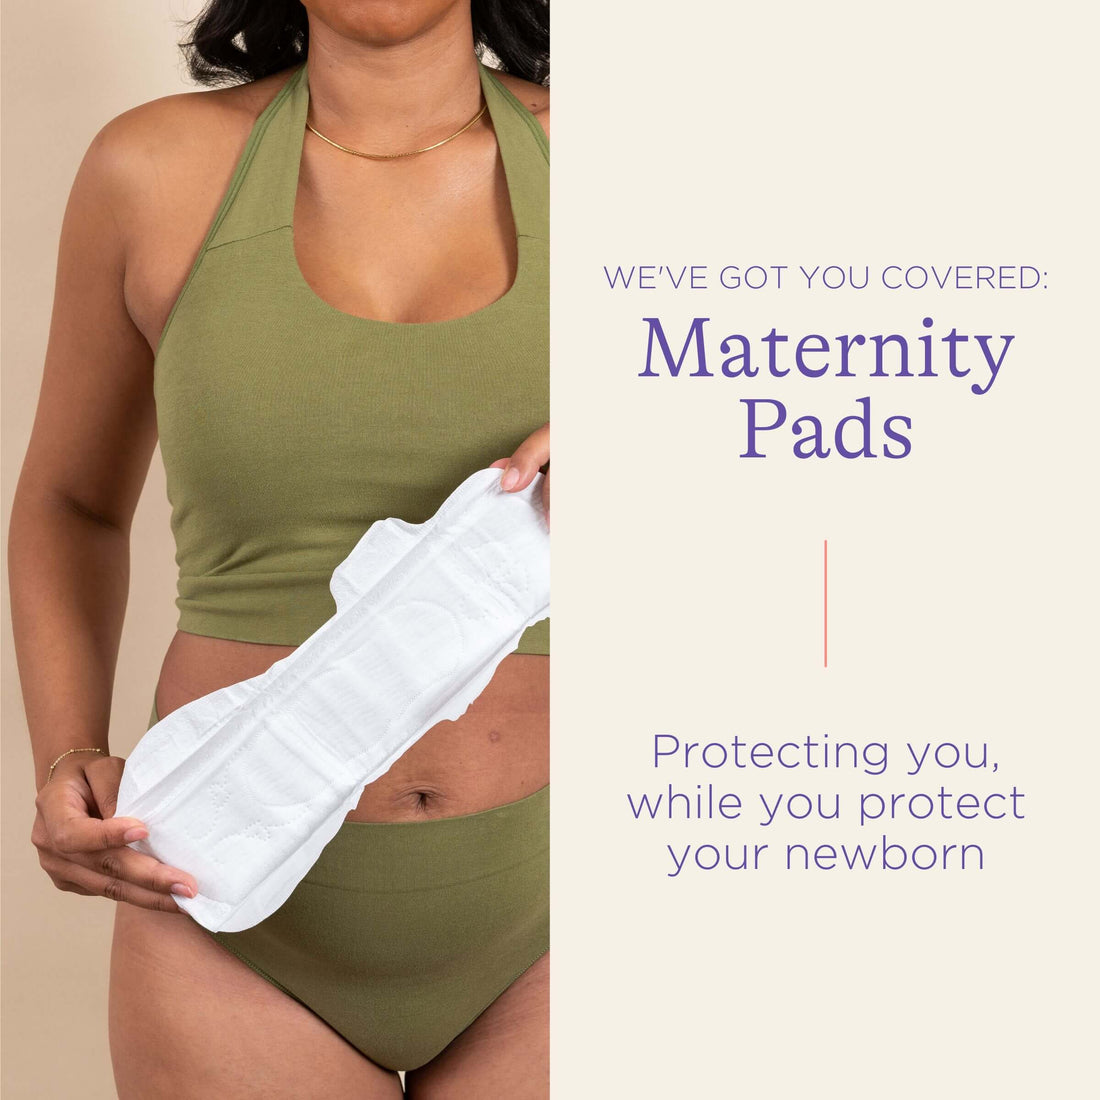 Extra Absorbent Maternity Pads: 0-2 weeks post-birth – Lansinoh UK